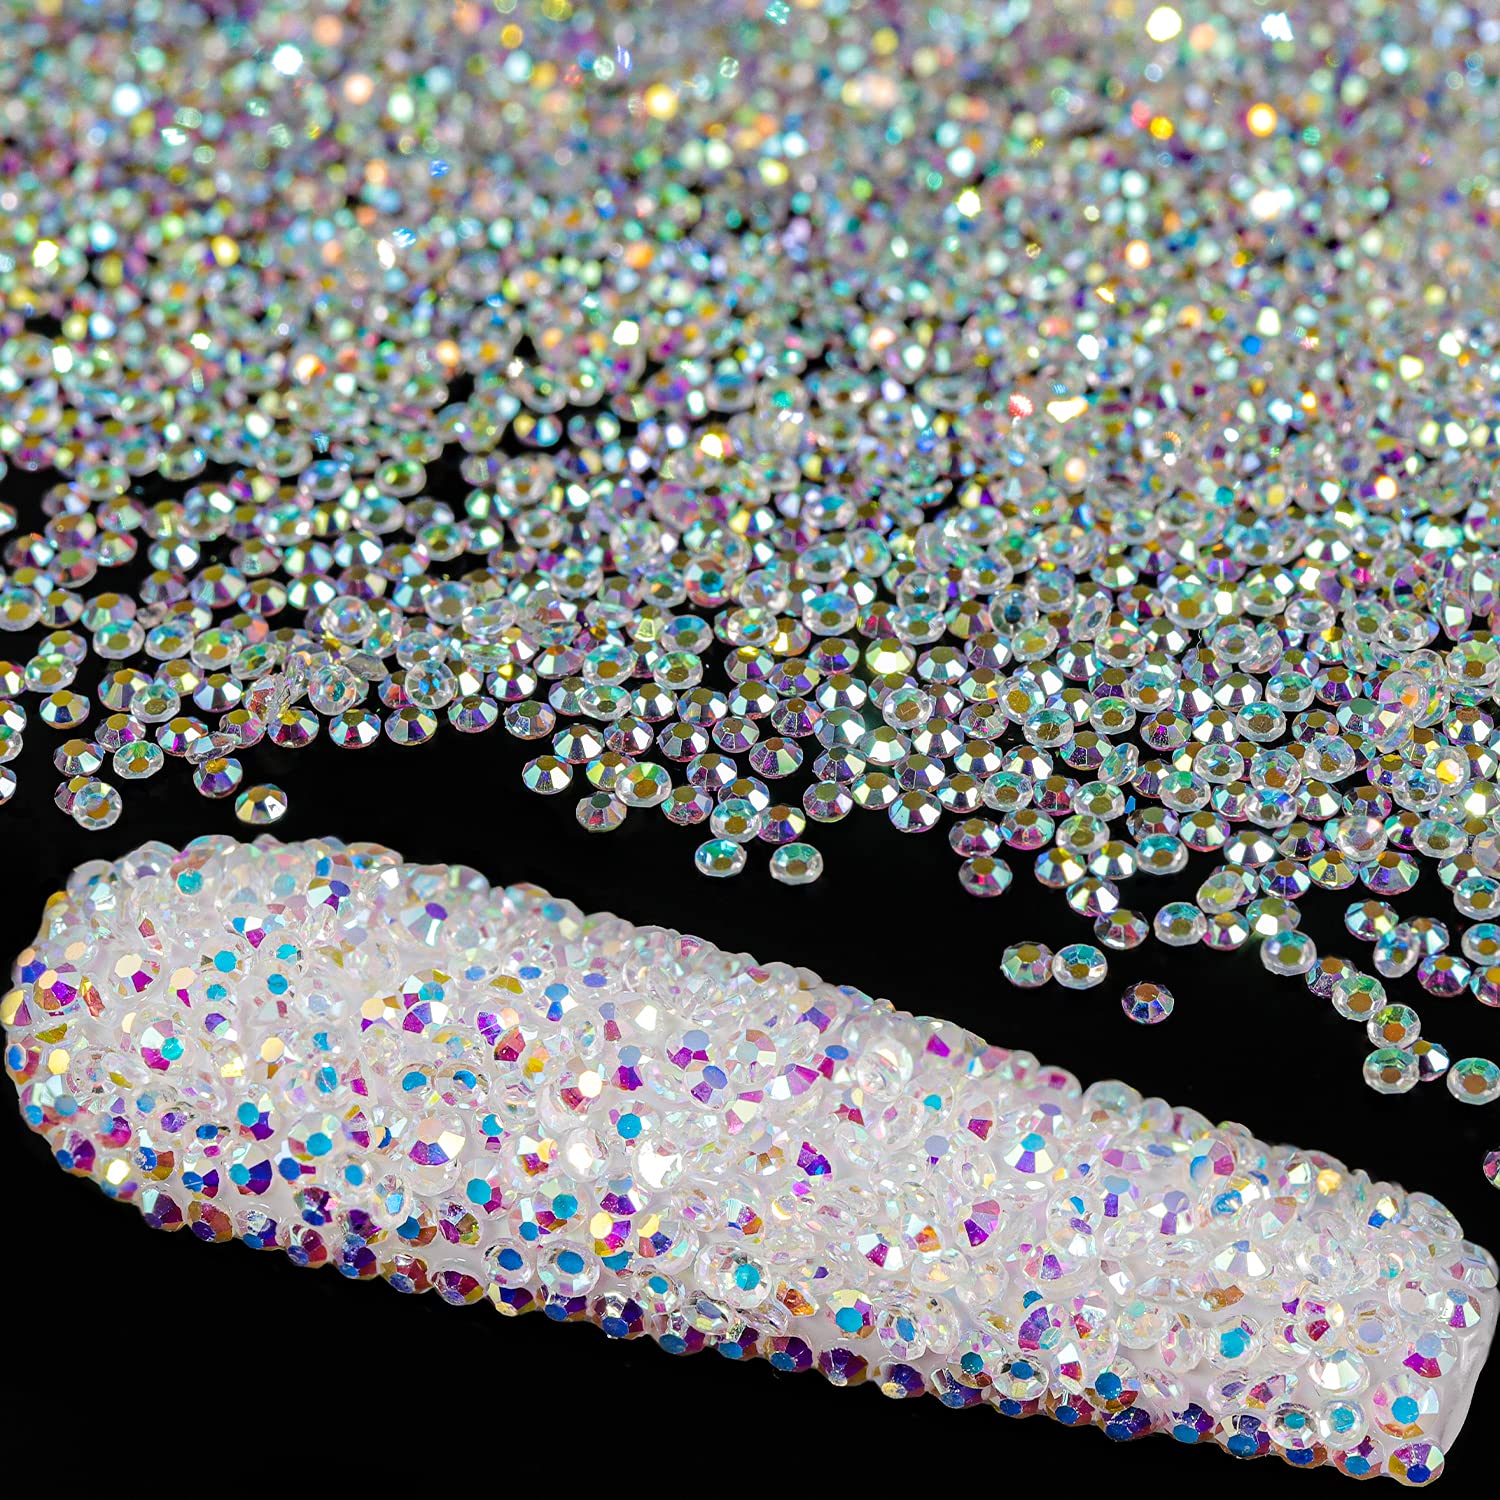  10000PCS Rhinestones Iridescent Crystals Long Lasting AB Shine  Like Swarovski for Nail Art Phone DIY Crafts& Nail Beauty Makeup Decoration  : Beauty & Personal Care